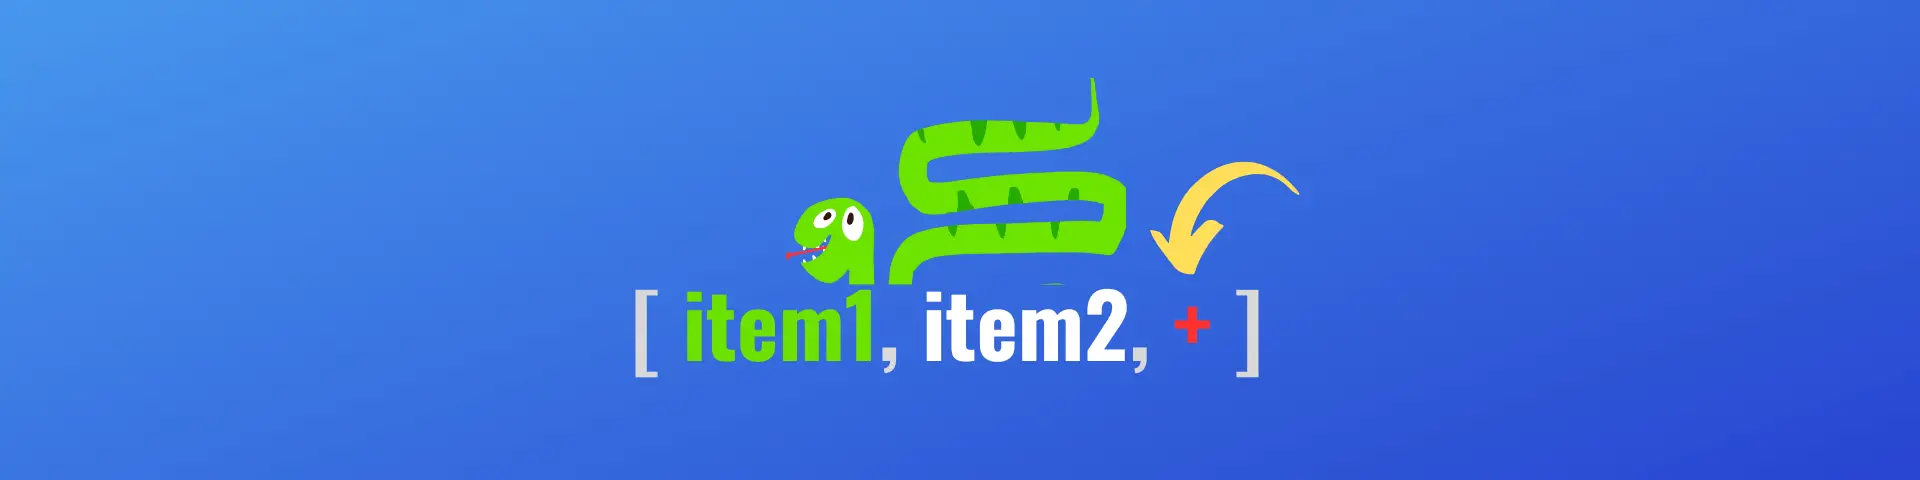 Add item to list using Python